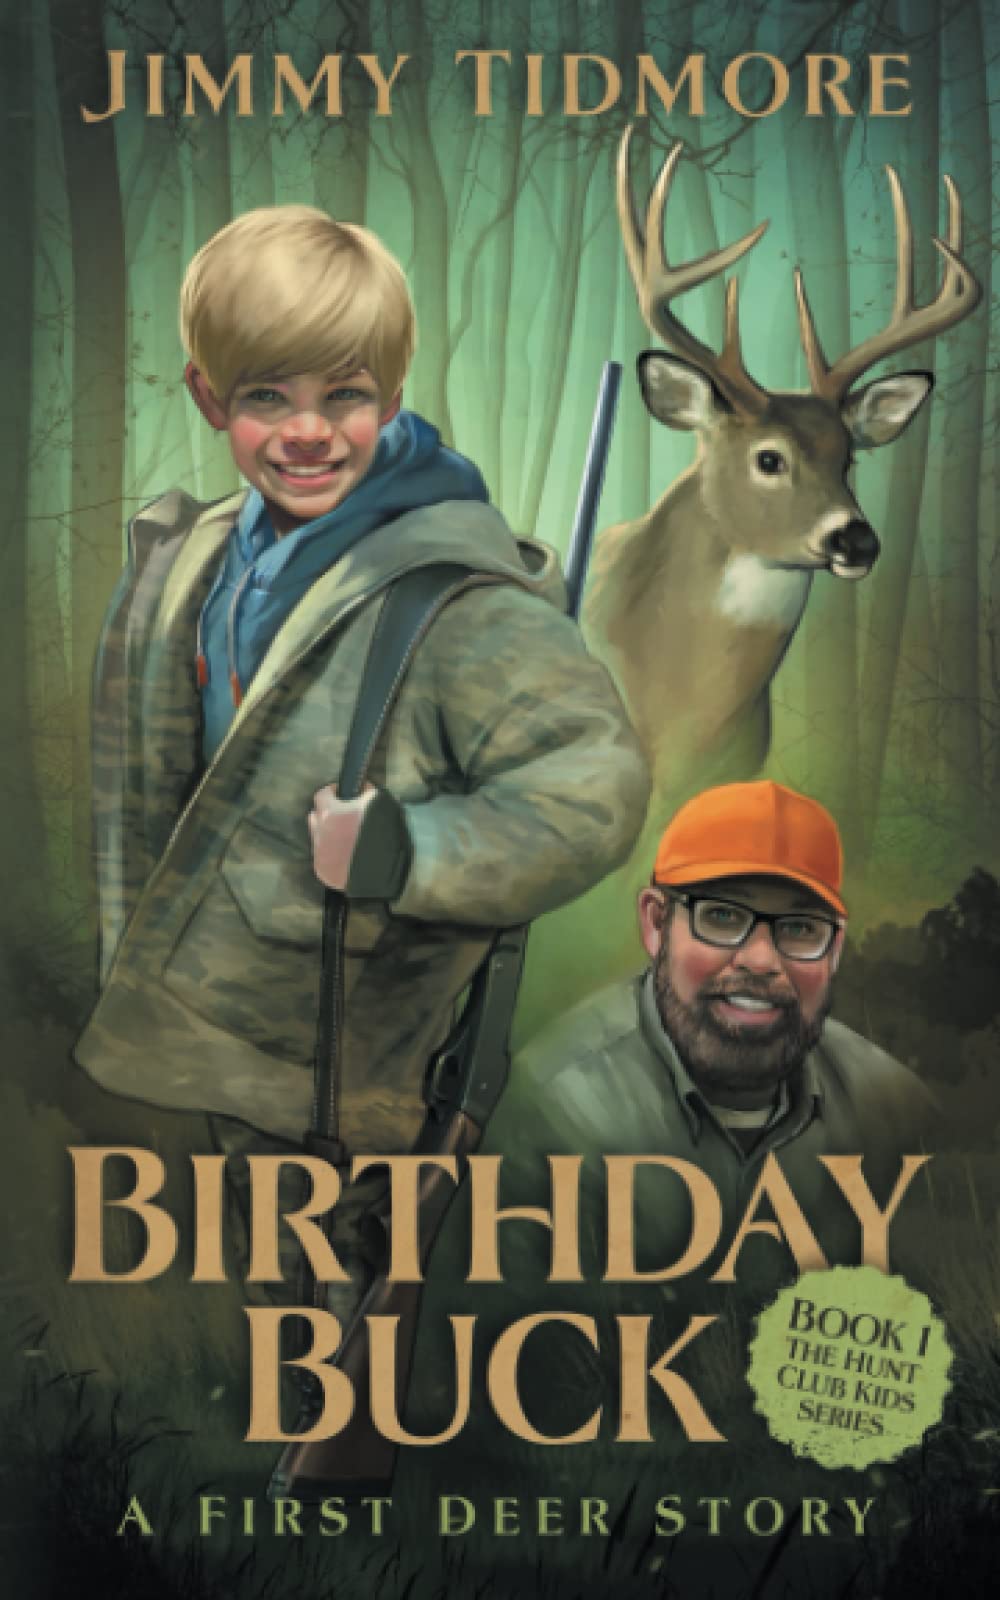 Birthday Buck: A First Deer Story (The Hunt Club Kids Series)